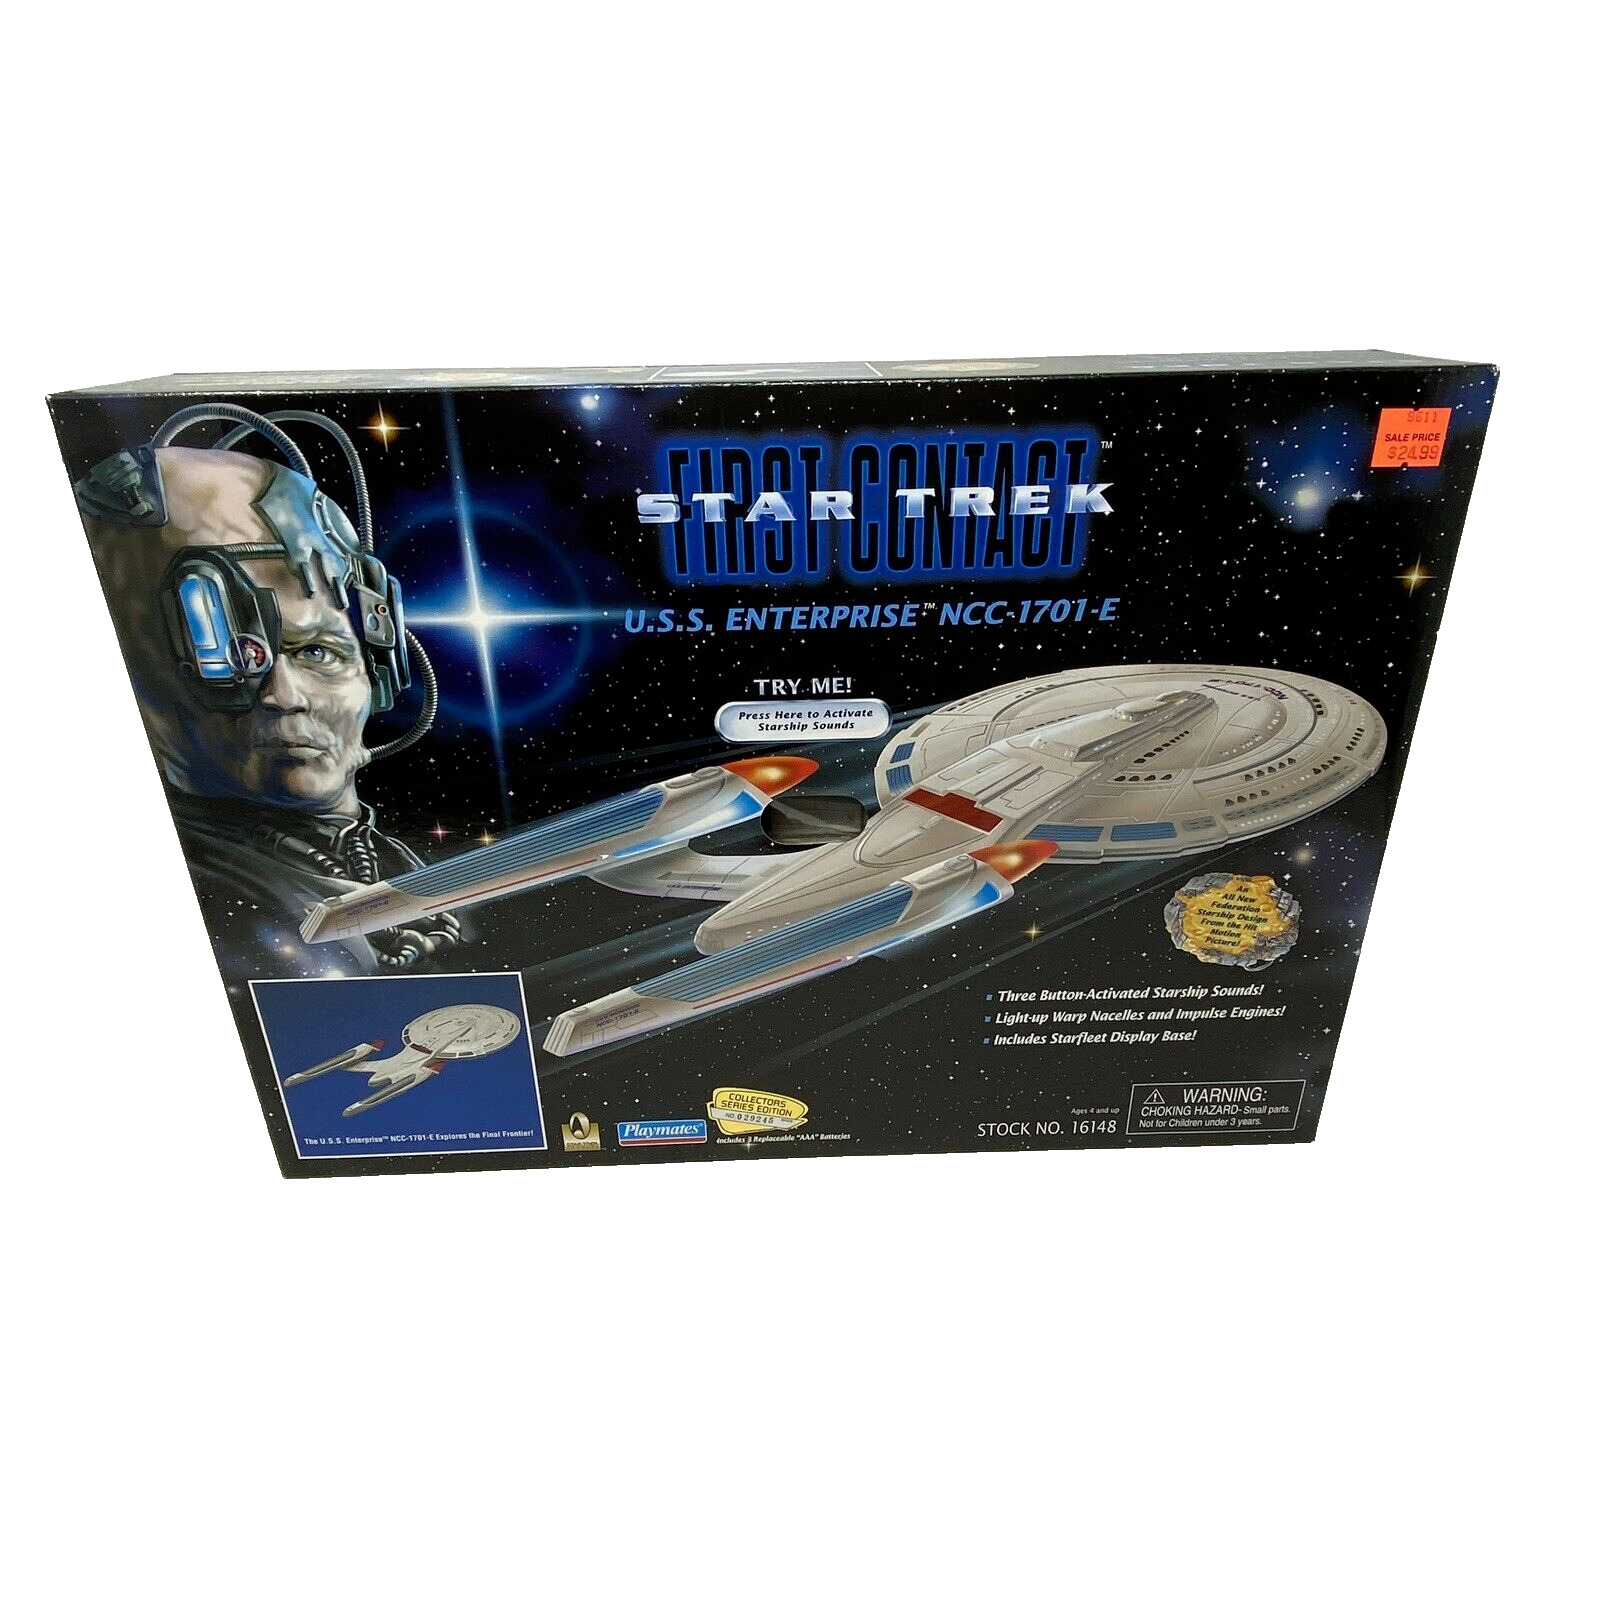 NIB Star Trek First Contact U.S.S Enterprise NCC-1701-E Starship Sounds tested